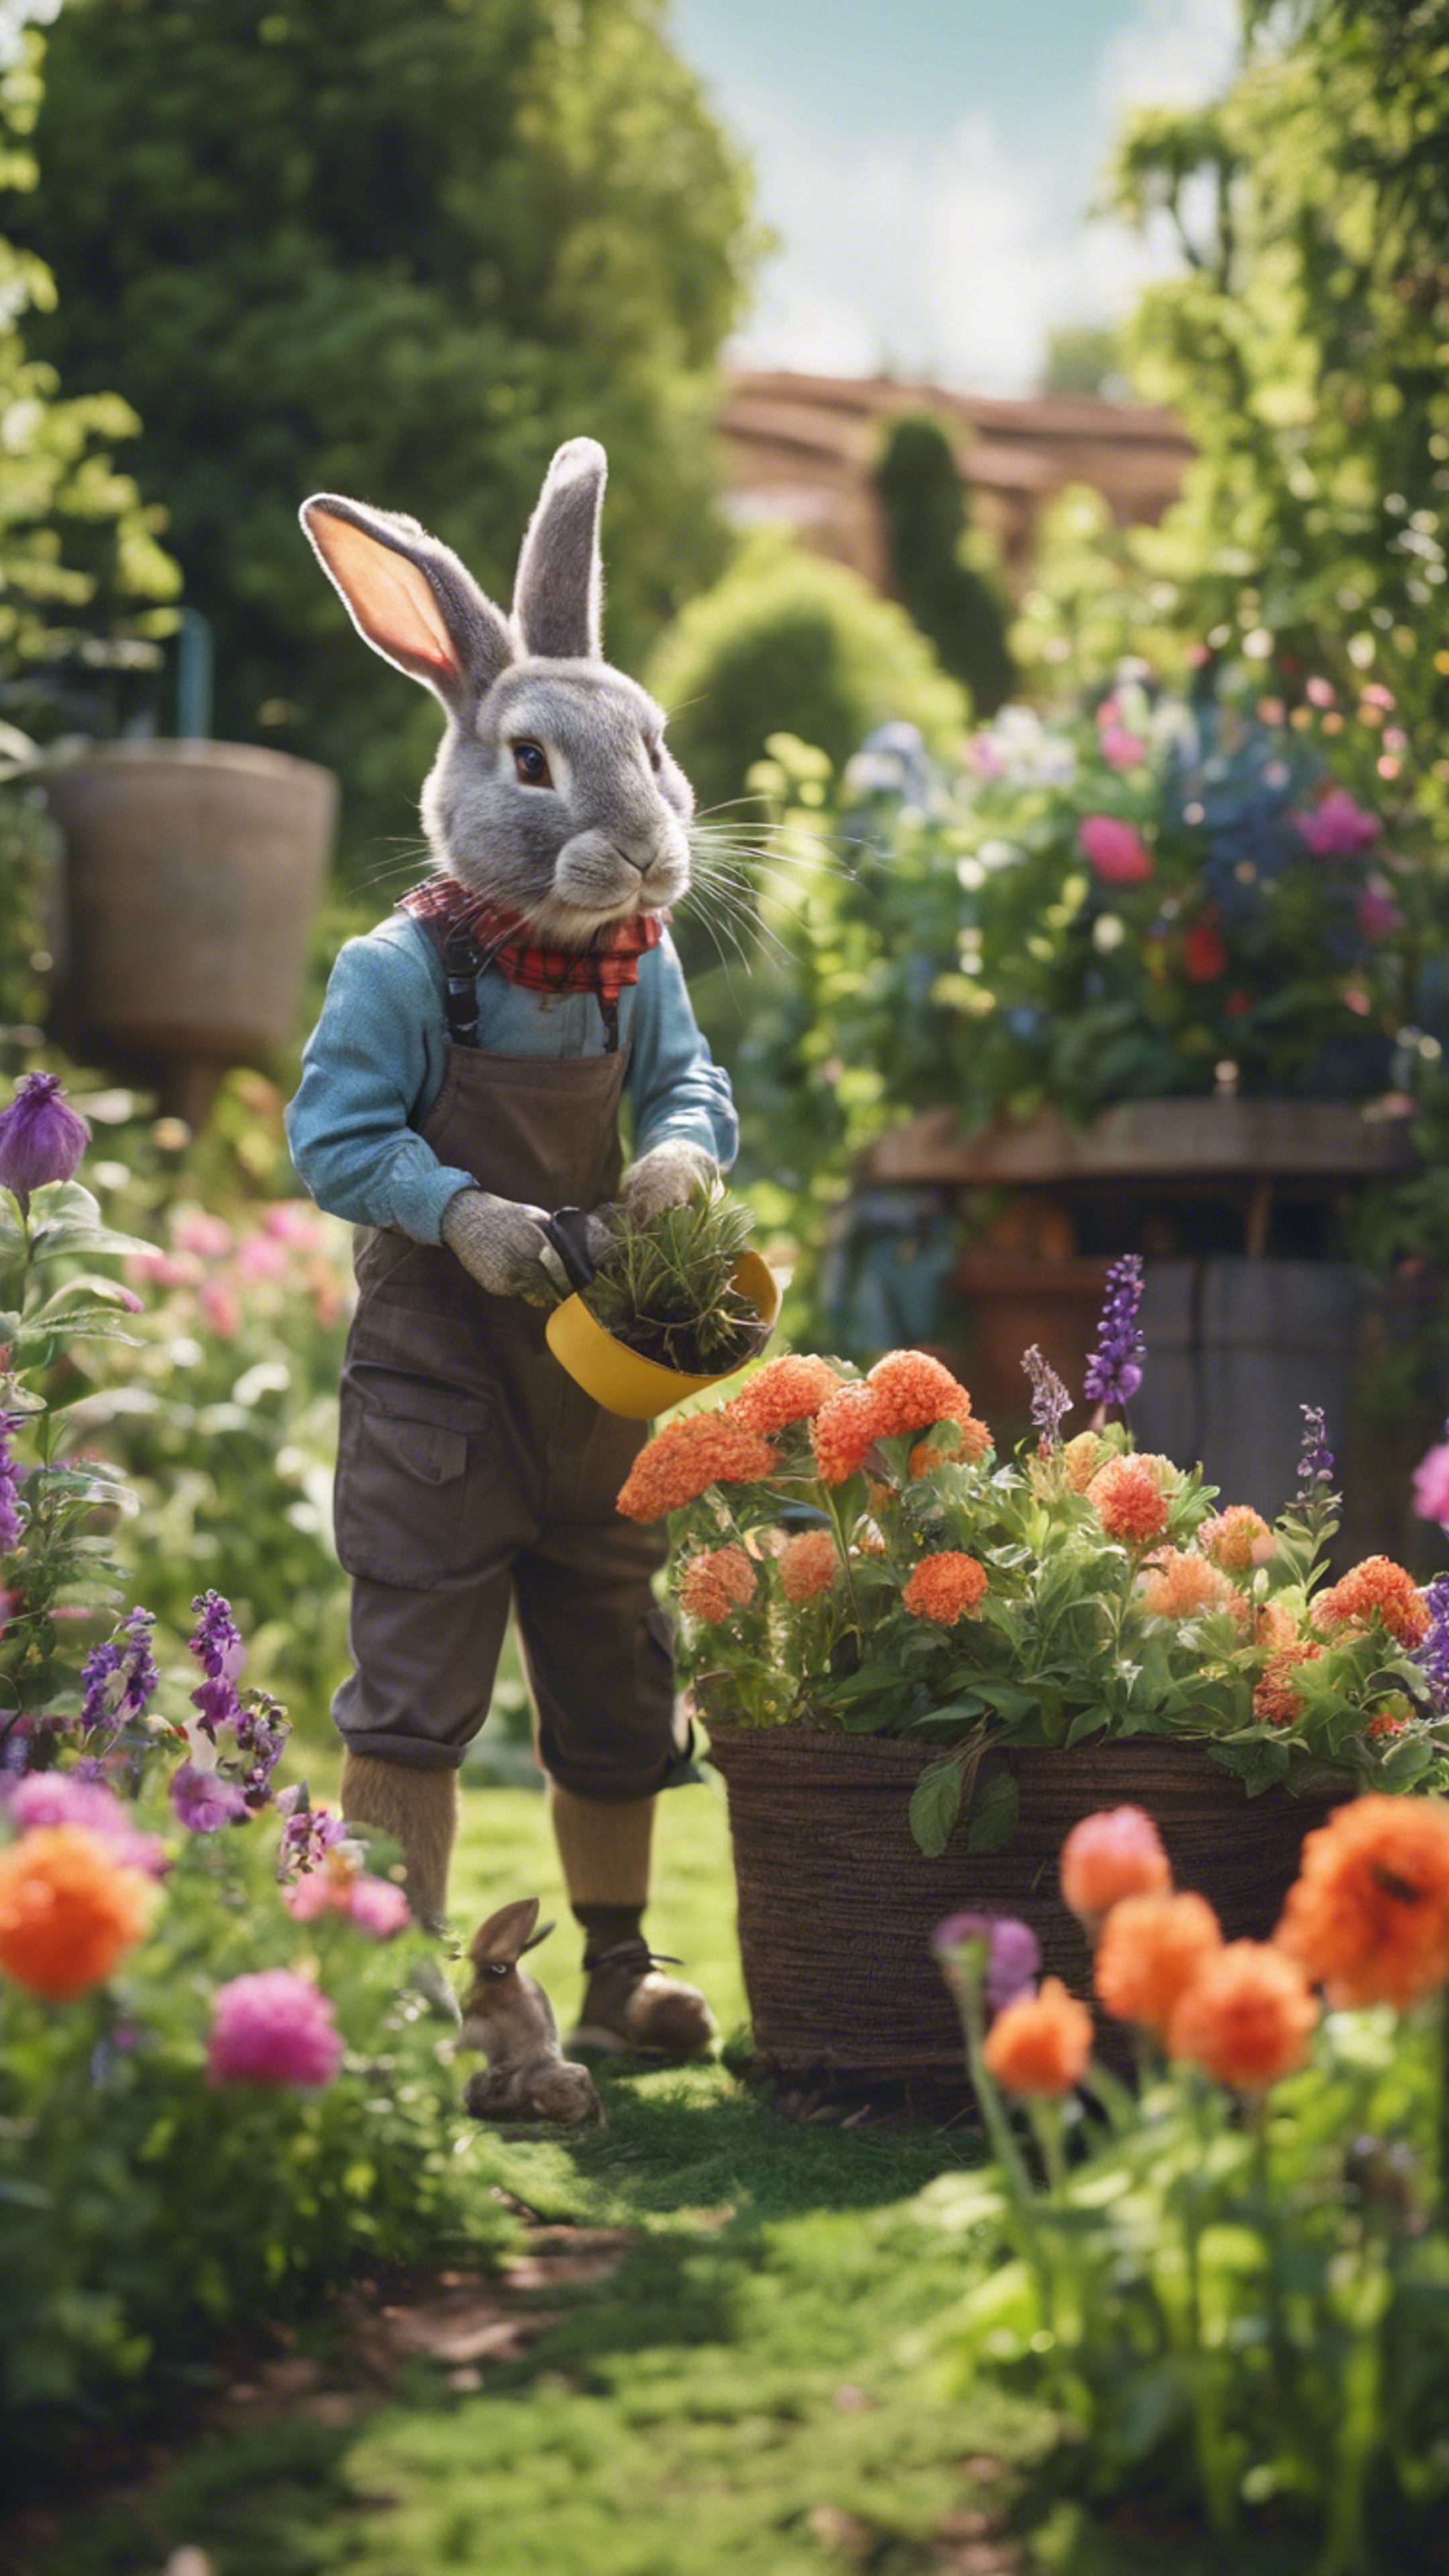 A rabbit gardener tending to vibrant flowers in a lush garden.壁紙[0e698fa077de490c84ef]